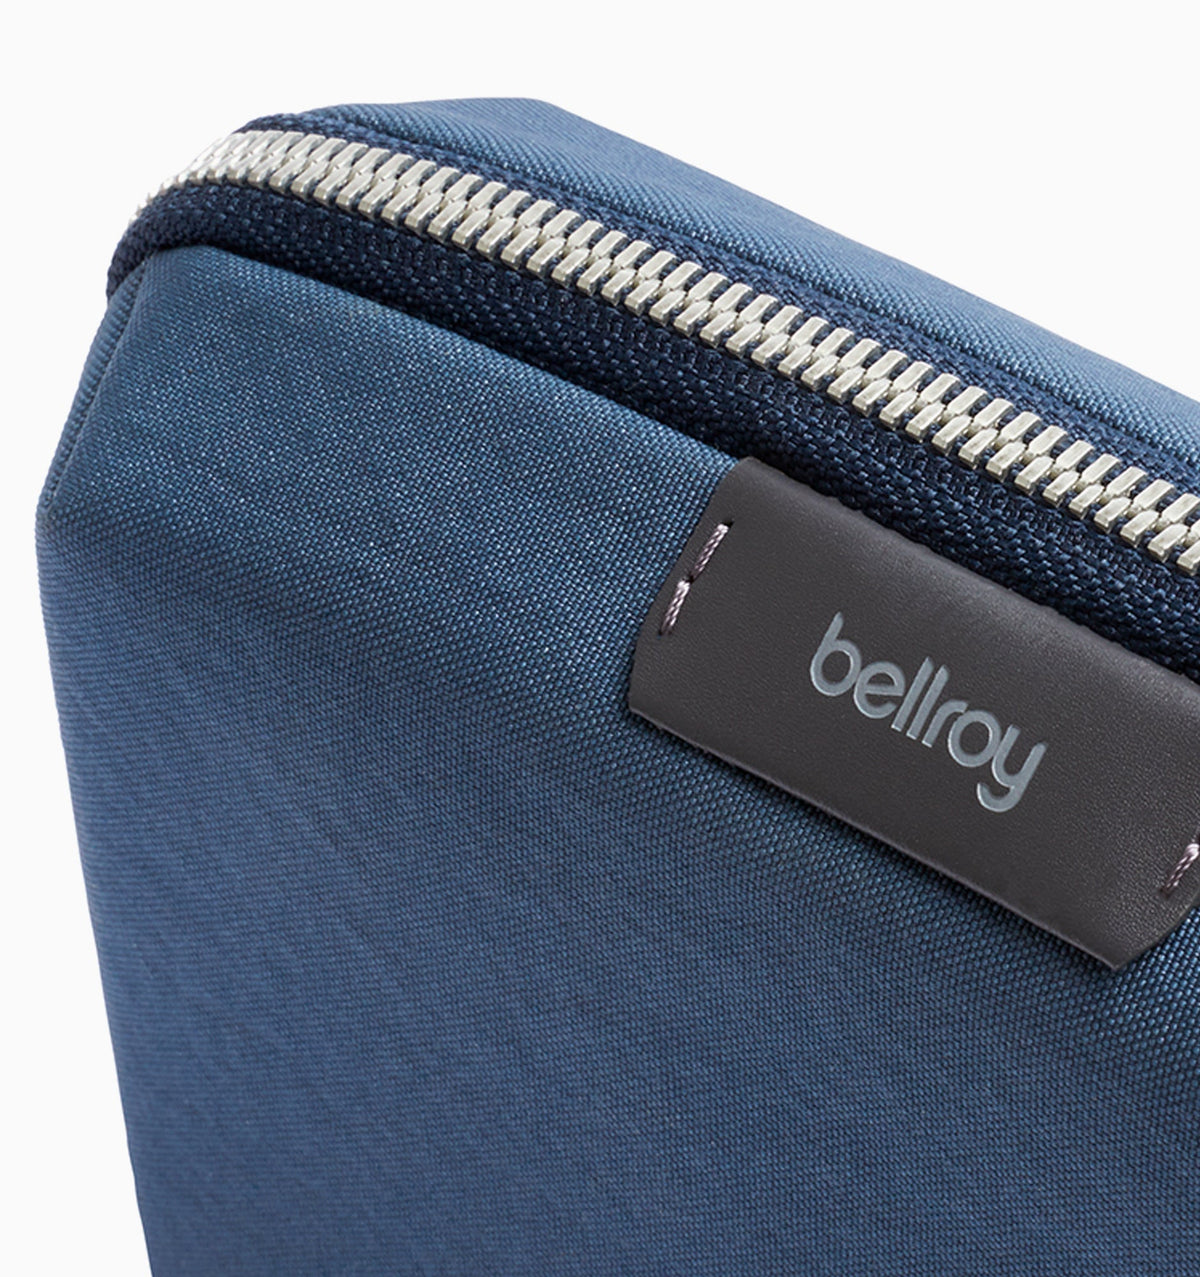 Bellroy Tech Kit Compact - Marine Blue